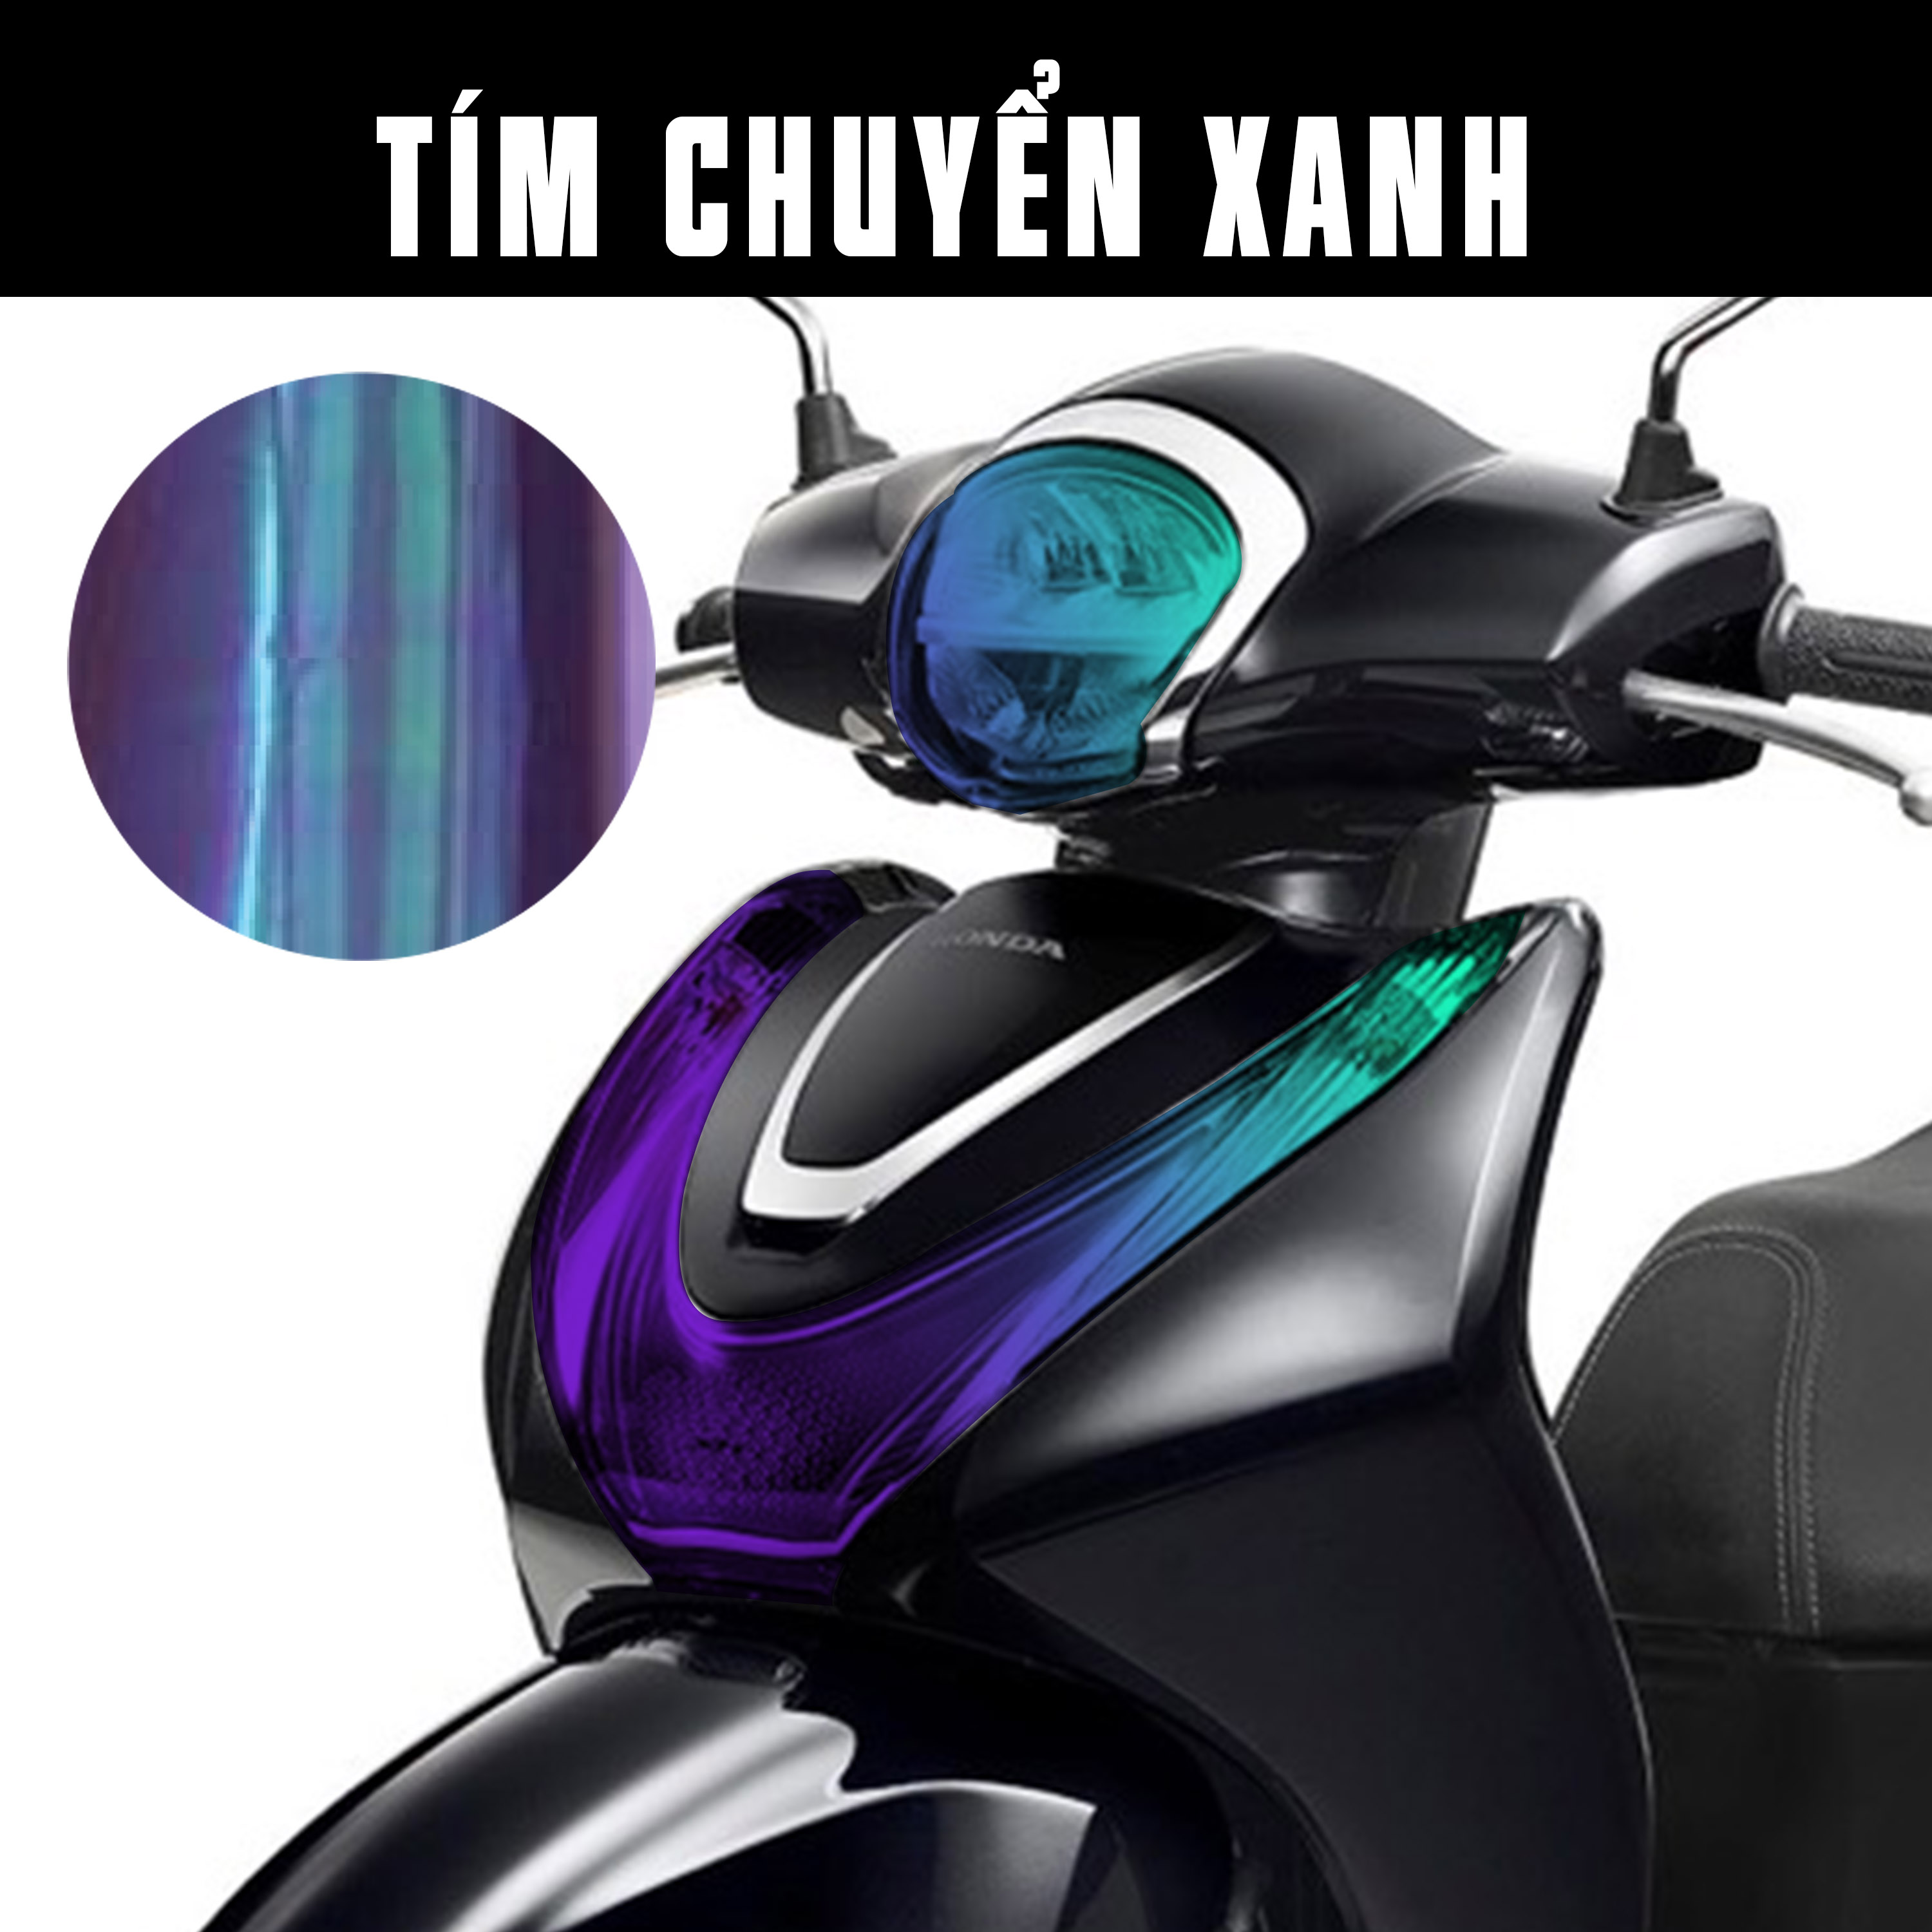 Phim titanium dán đèn xe SH mode 2020 - 2021 màu tím